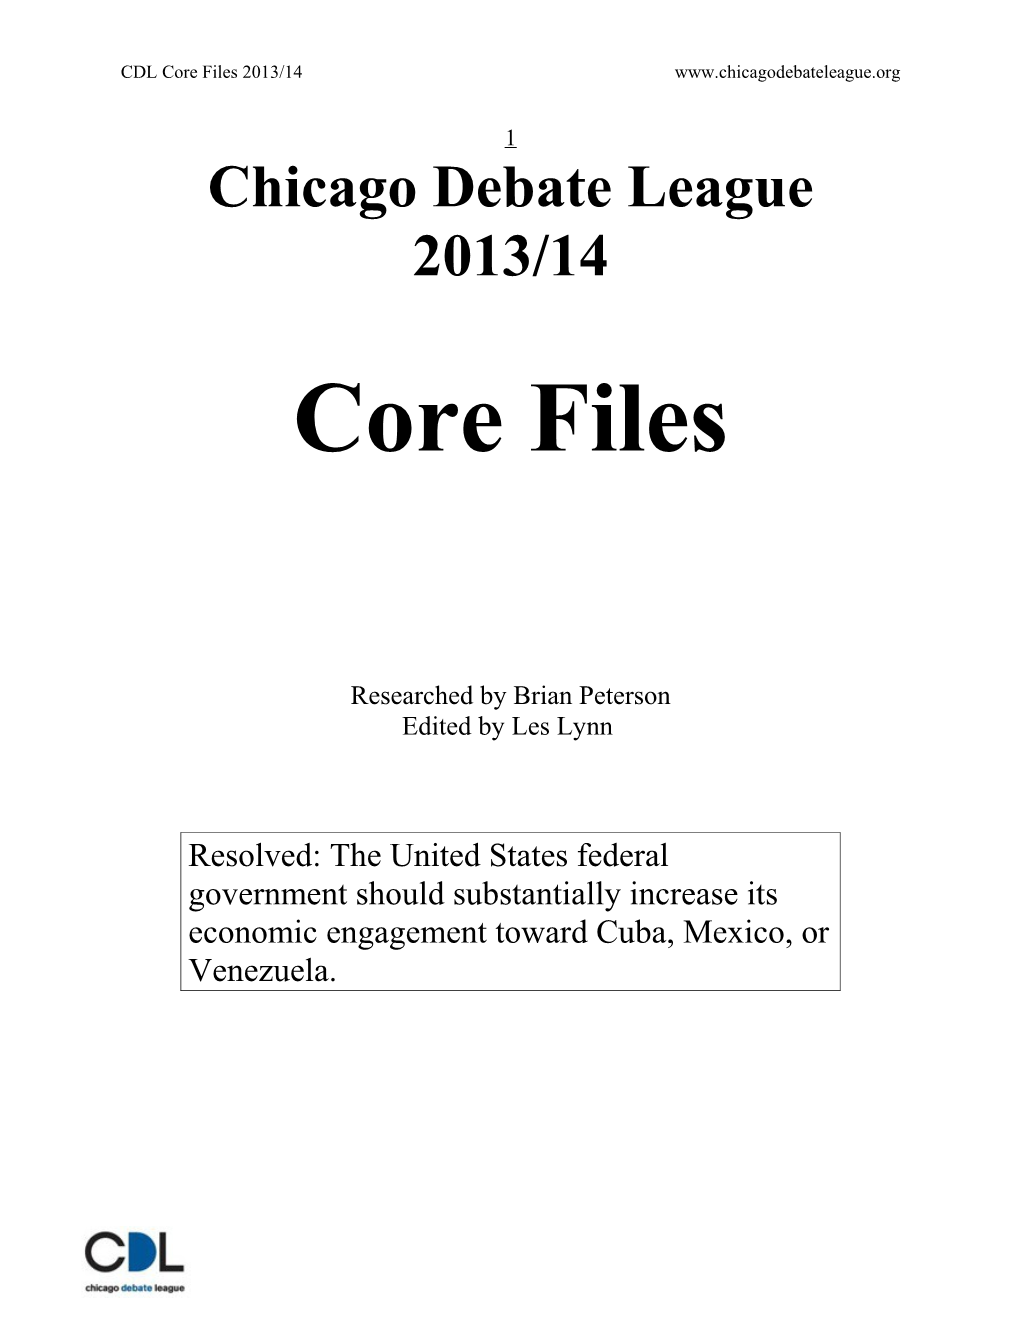 Chicago Debate League